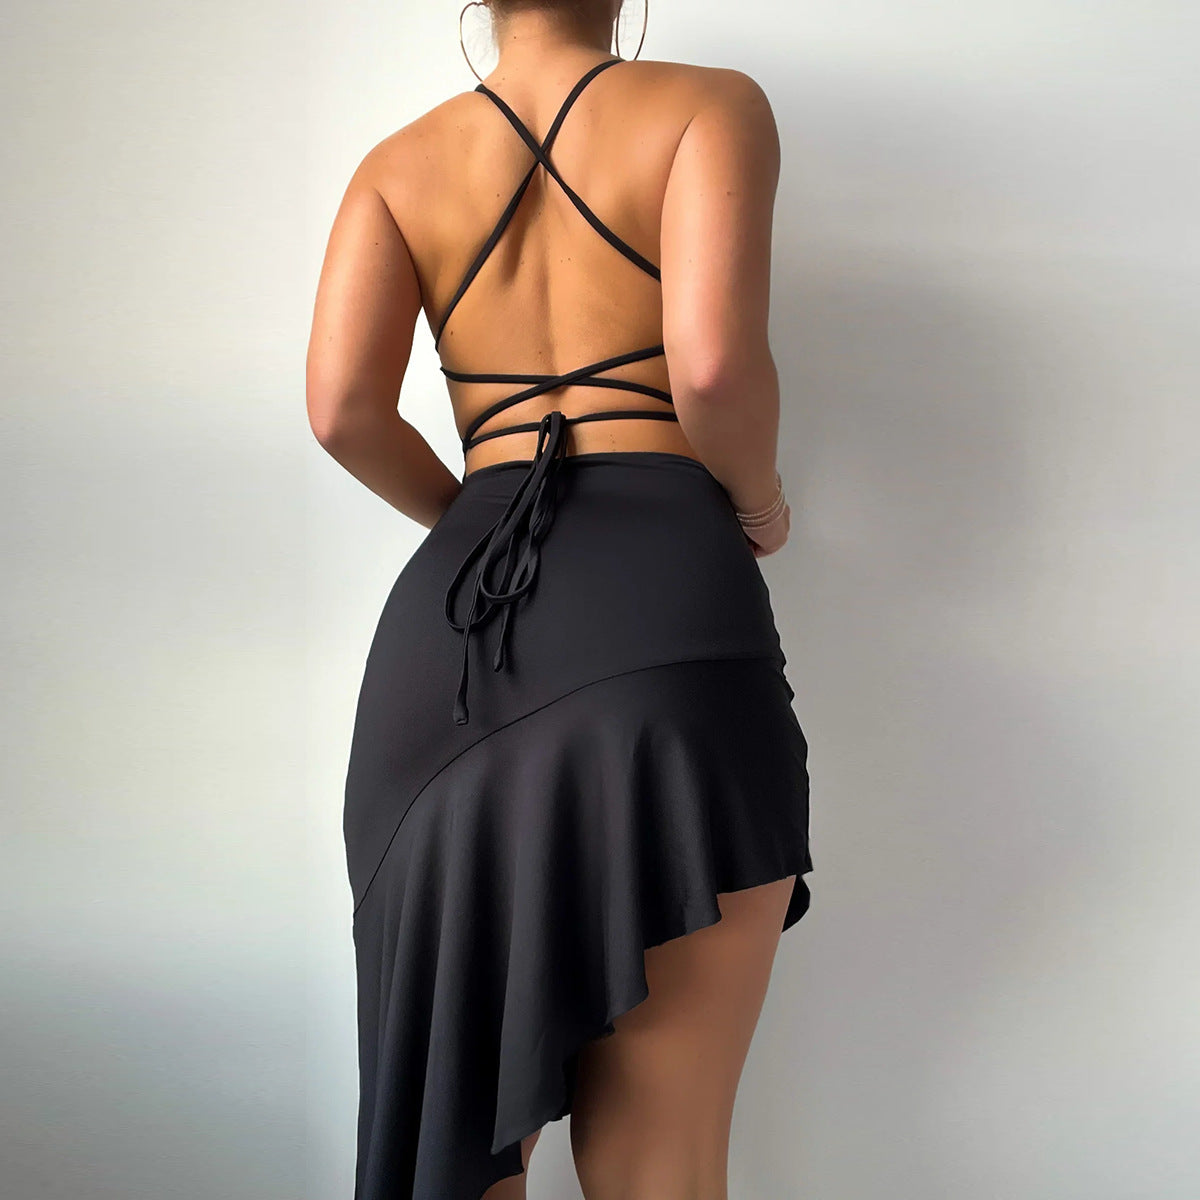 Women's Backless Lace-up Suspender Skirt Irregular